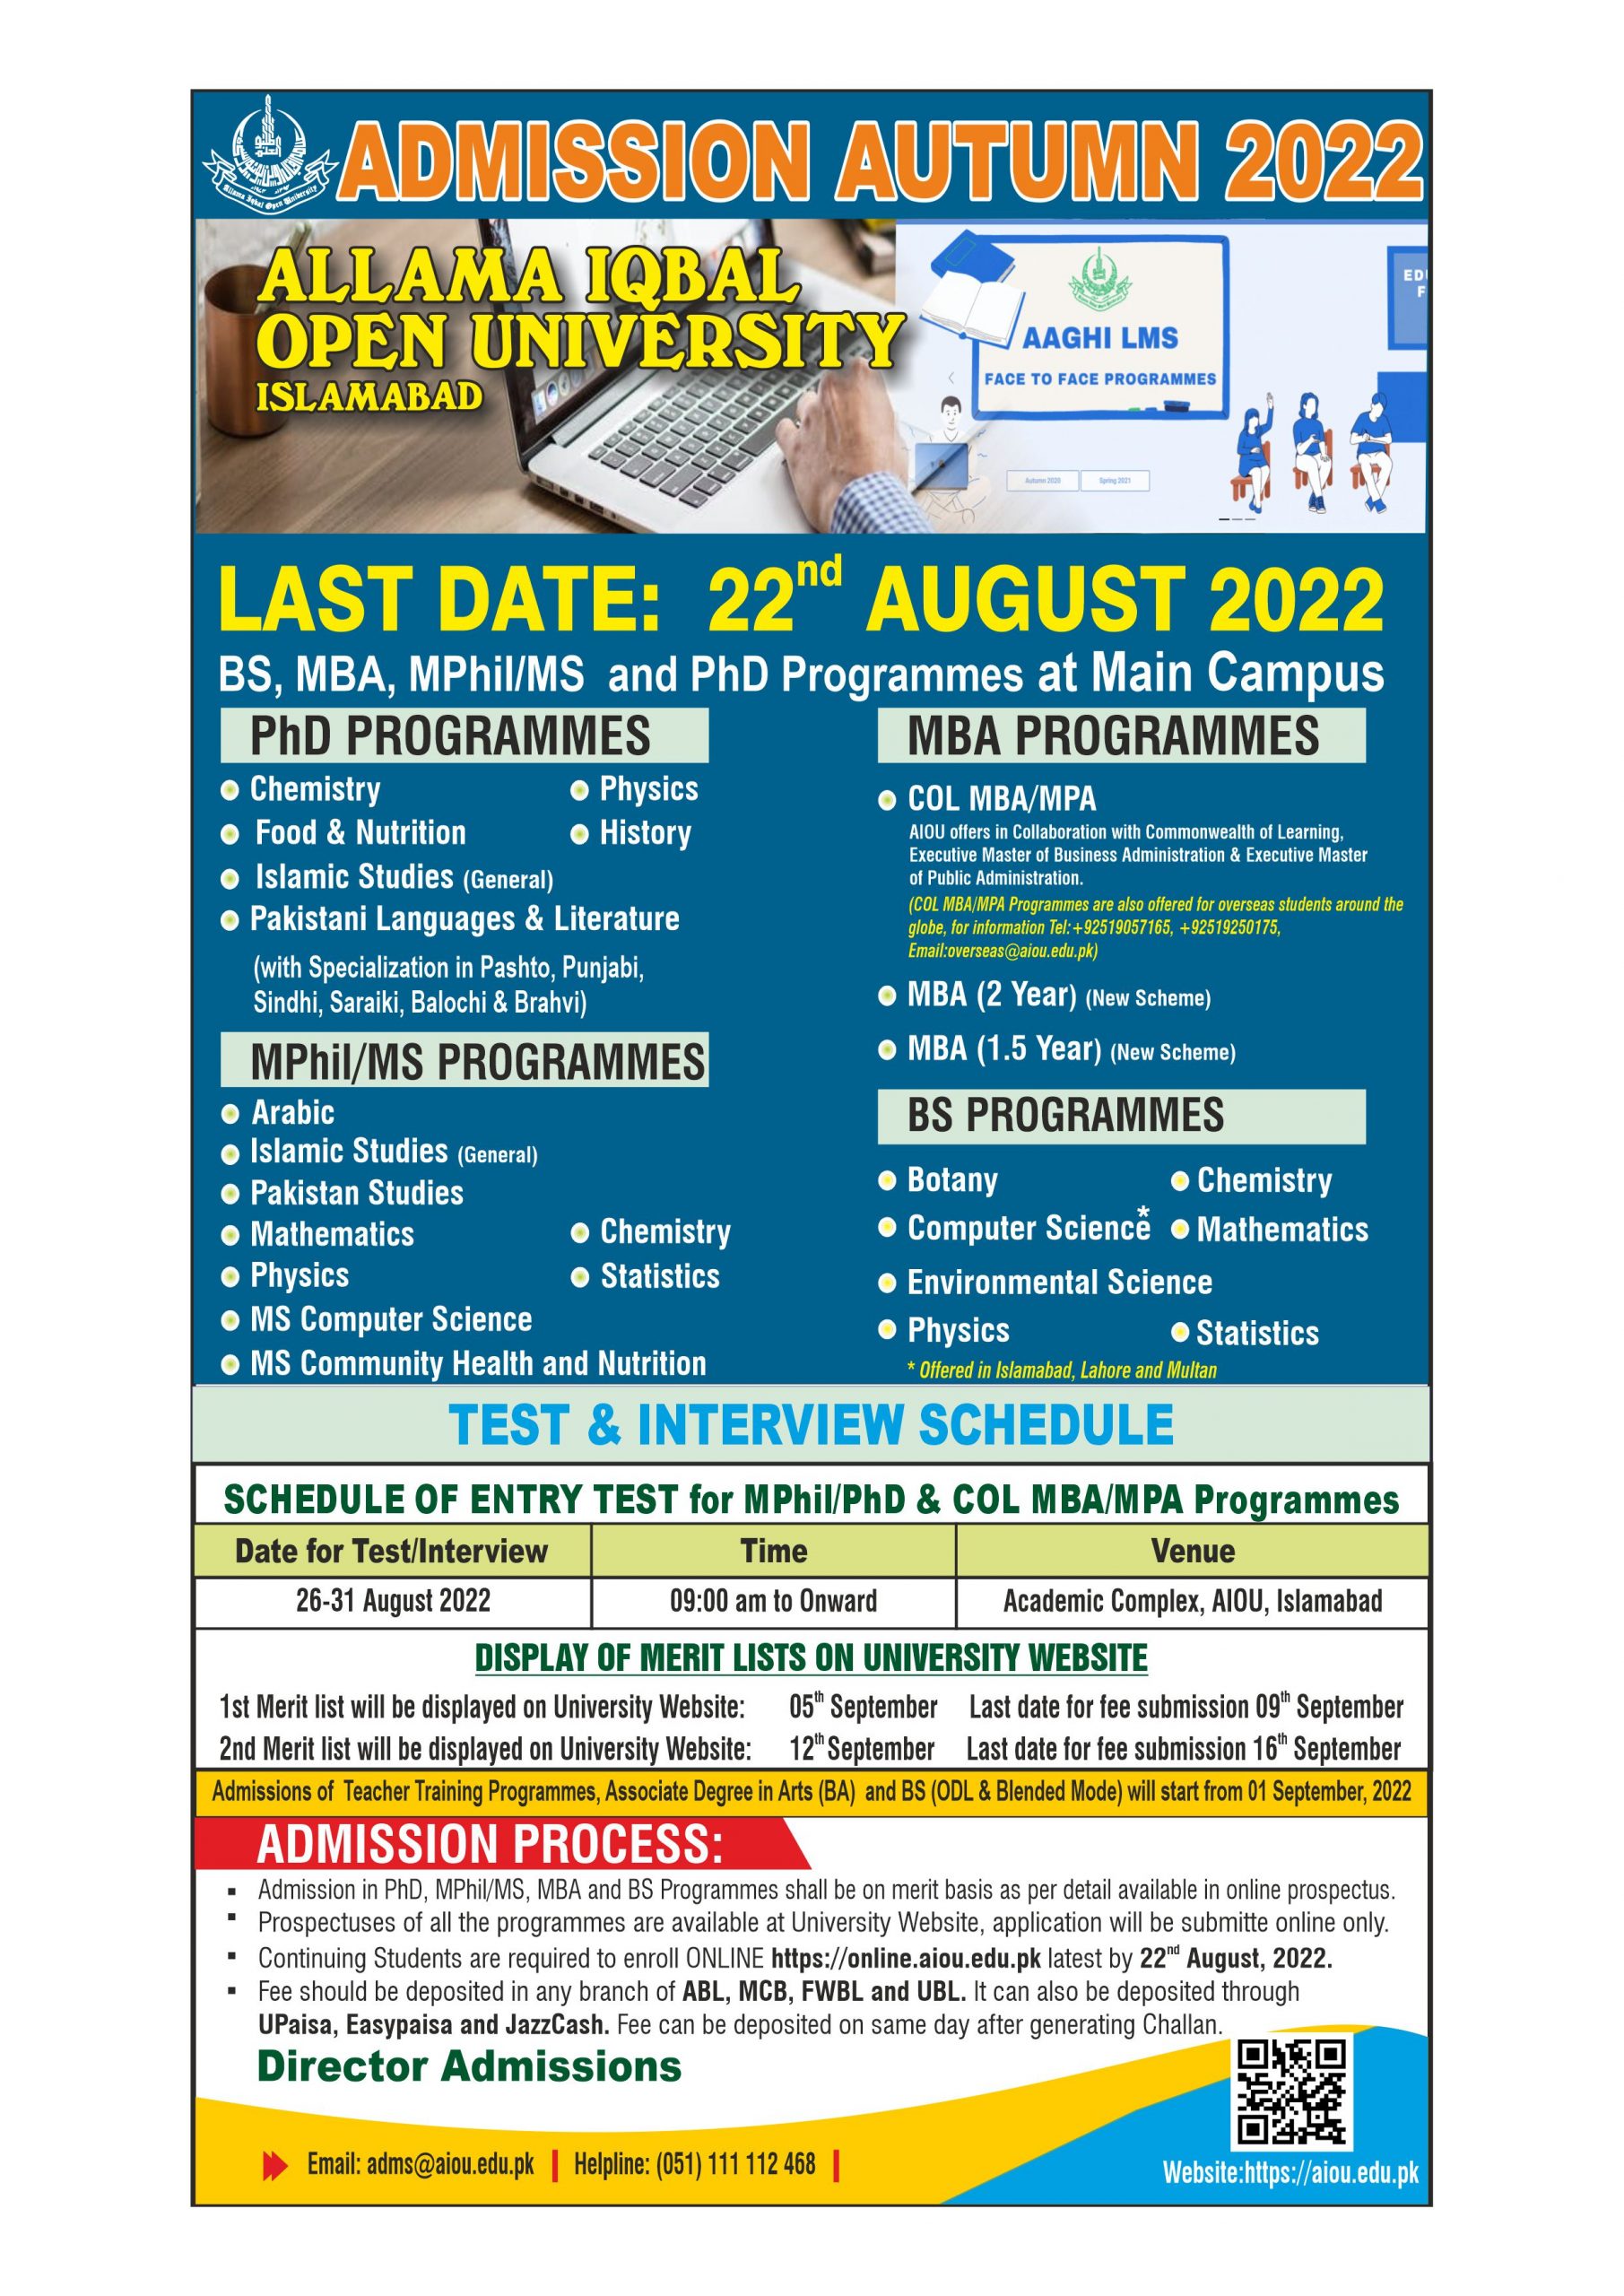 AIOU admission 2022 last date advertisement autumn semester August